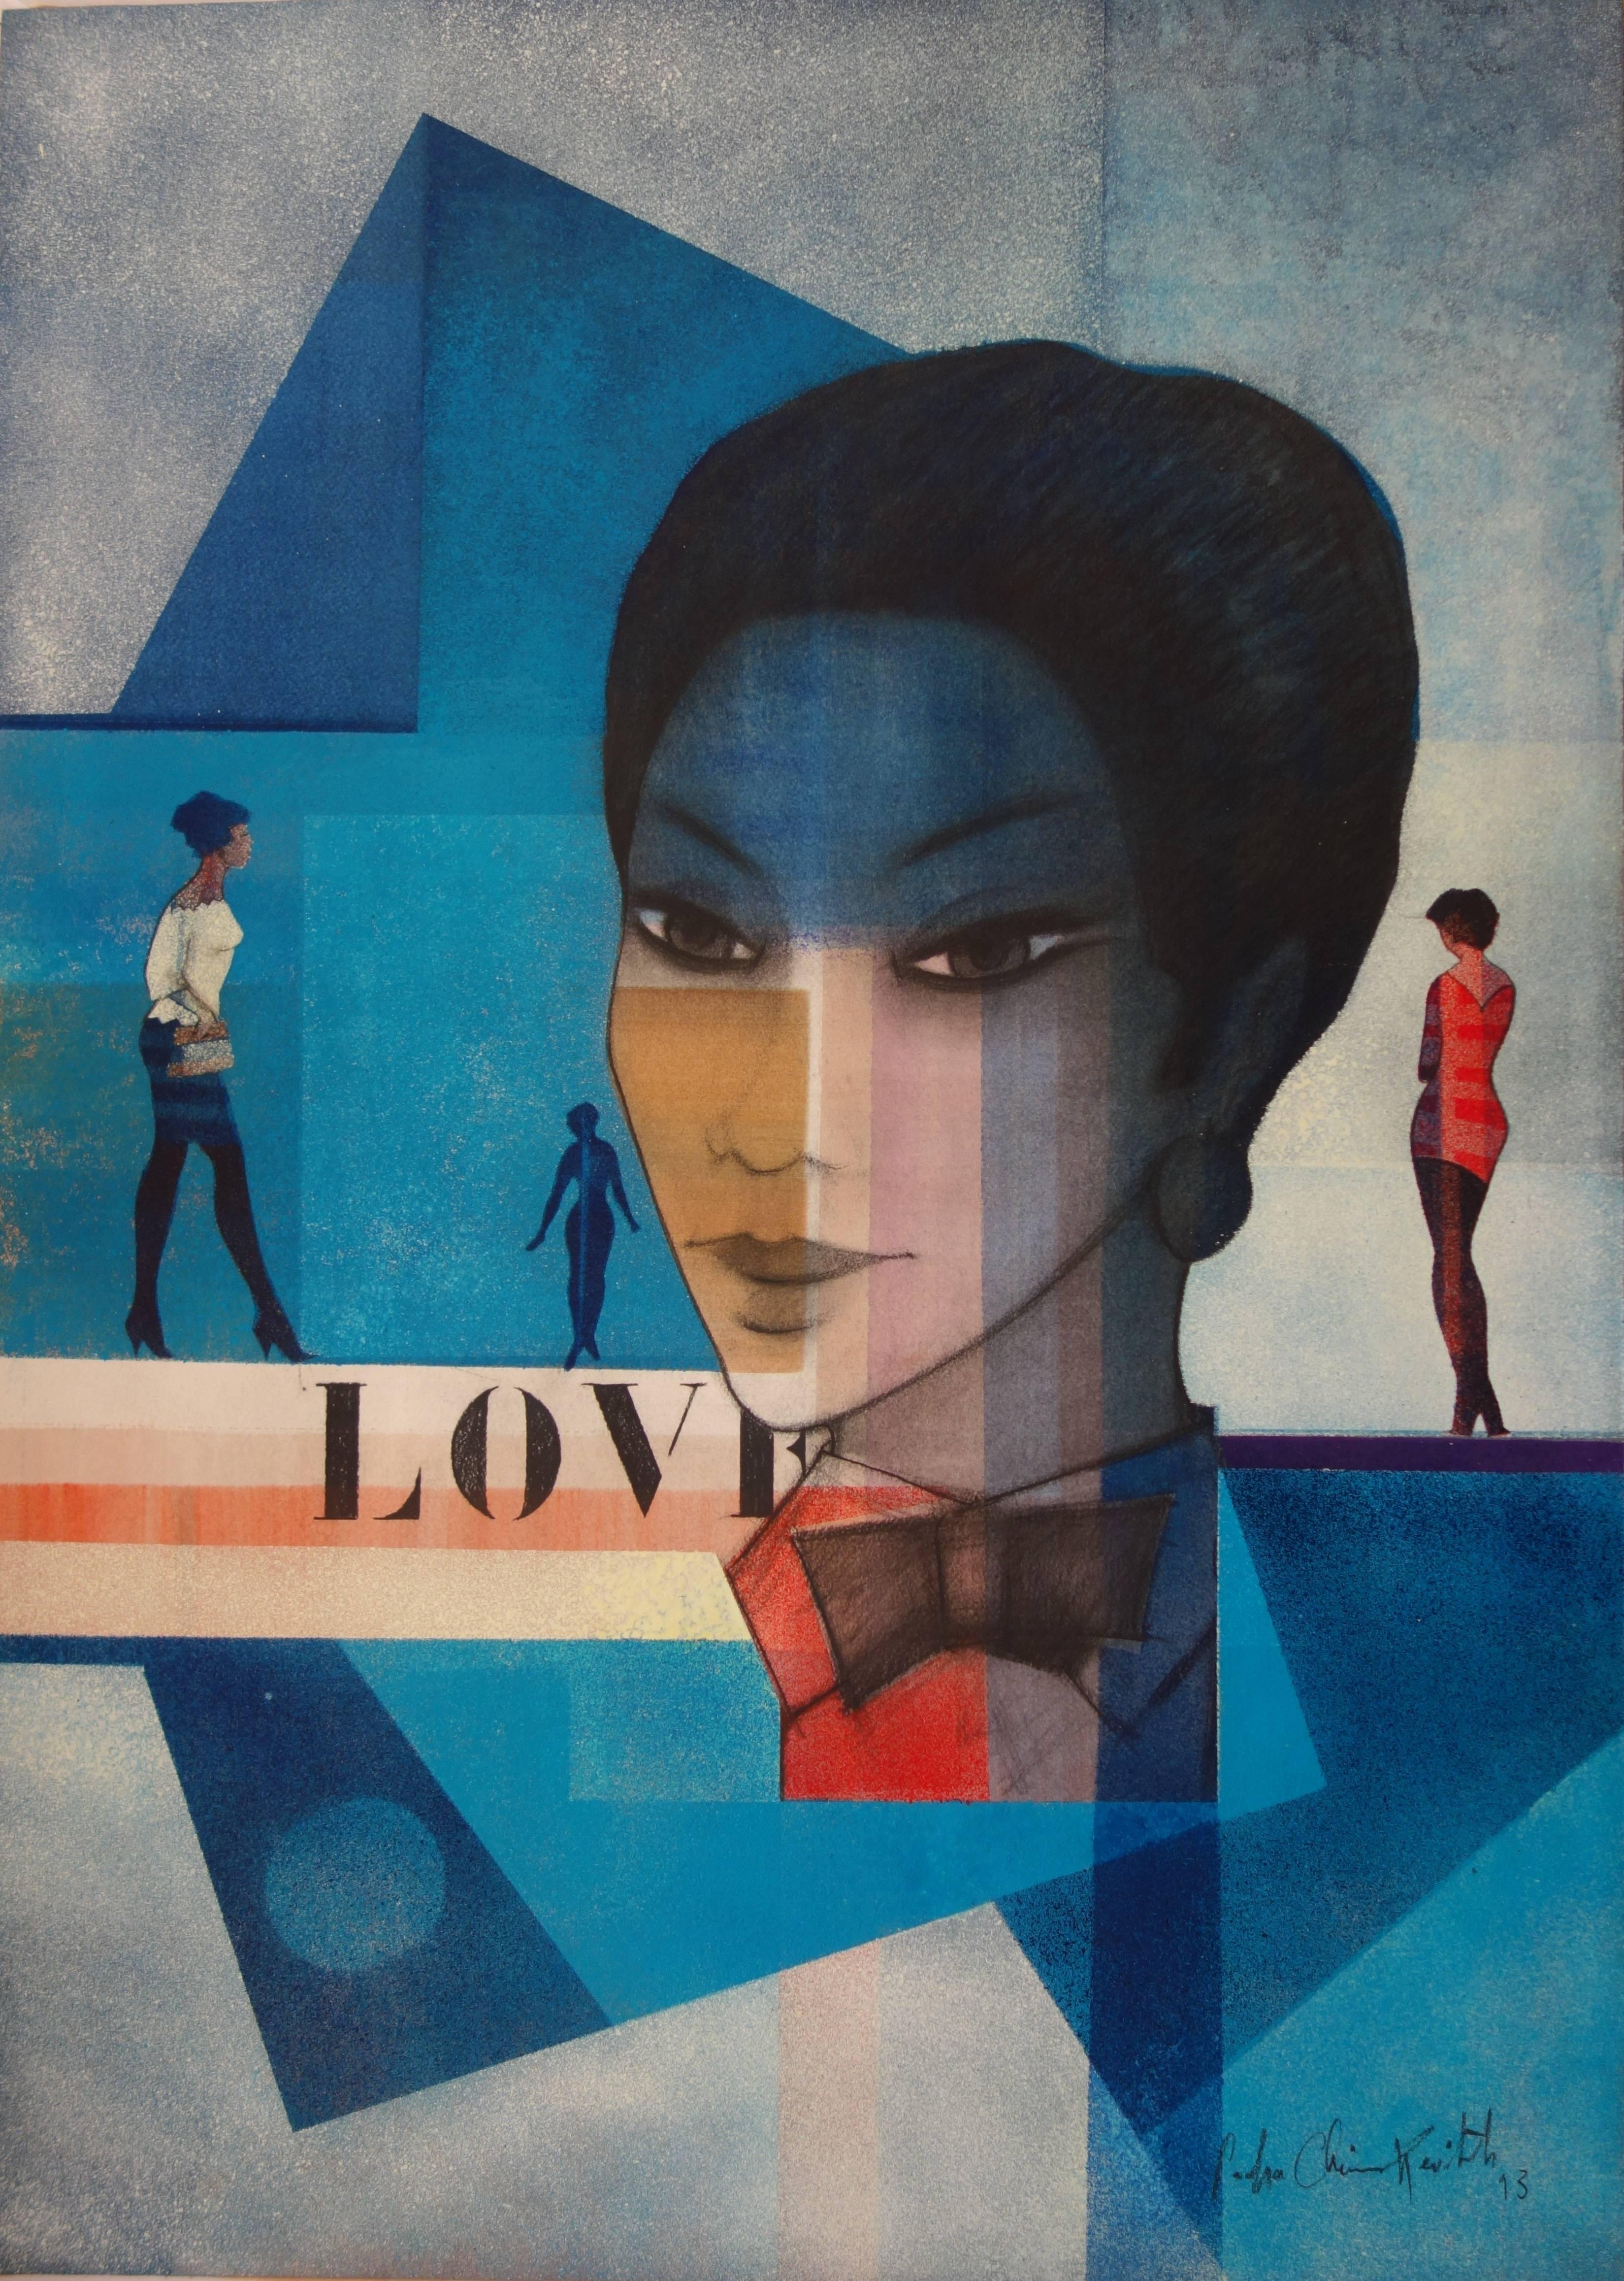 LOVE (Woman in Blue) - Original signed watercolor - 1993